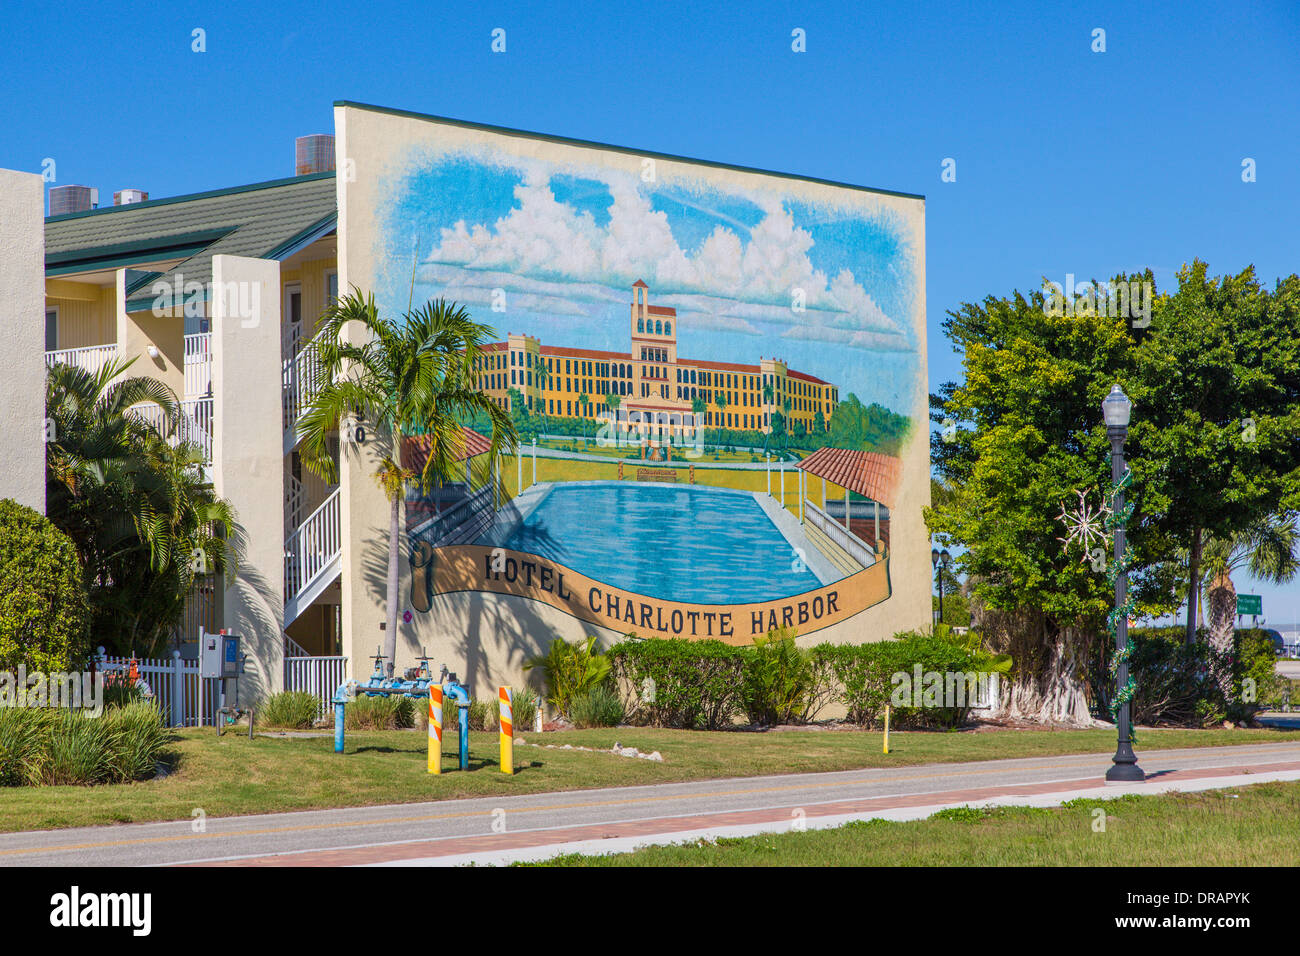 Mural painted on outdoor walls of buildings in Punta Gorda Florida Stock Photo